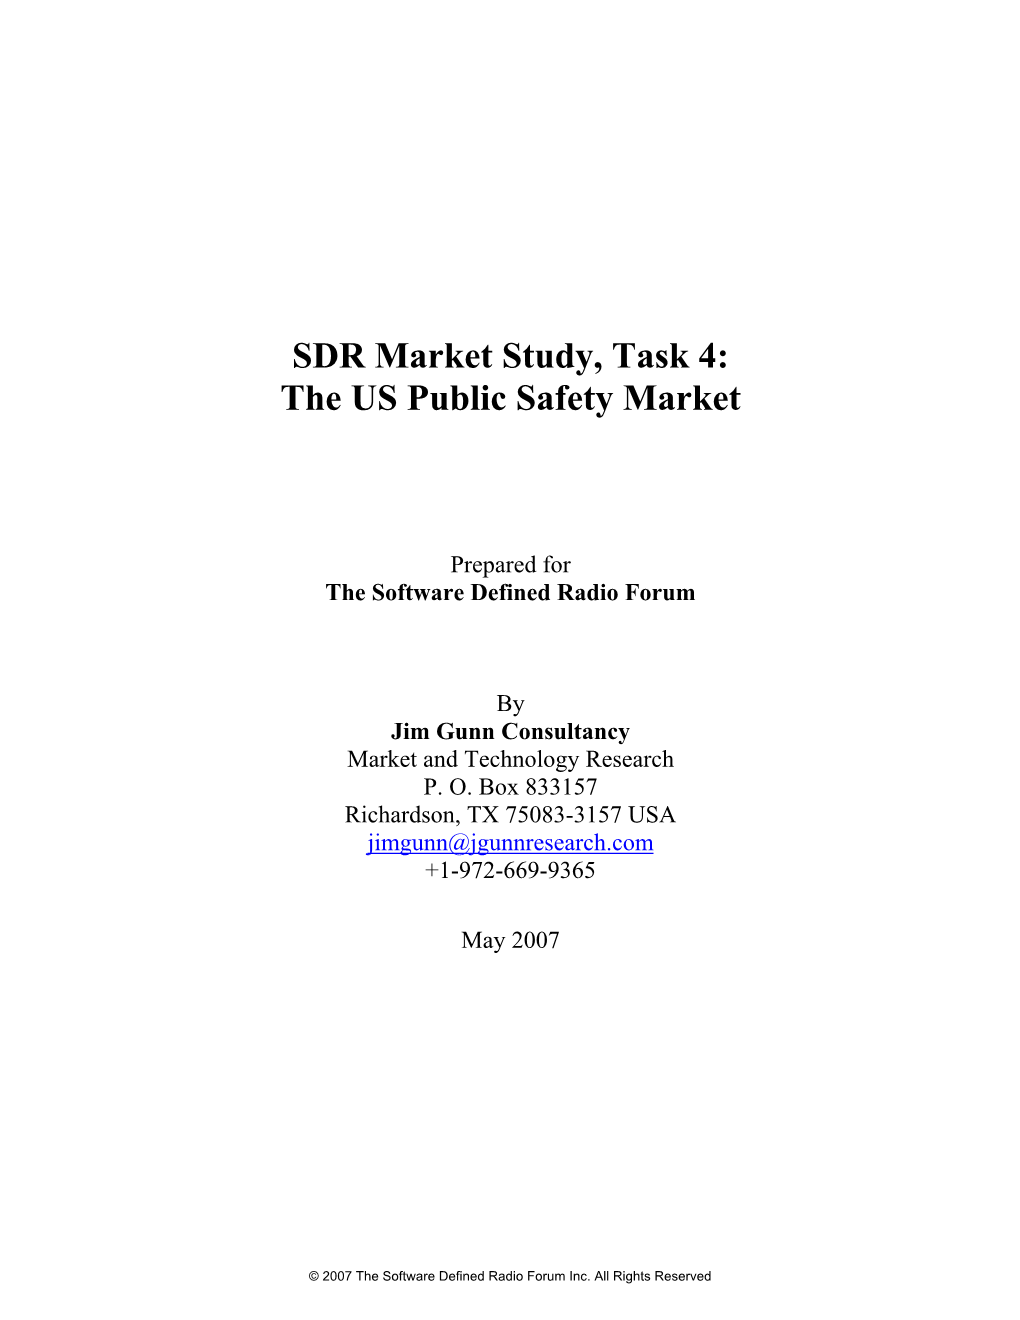 SDR Market Study, Task 4: the US Public Safety Market